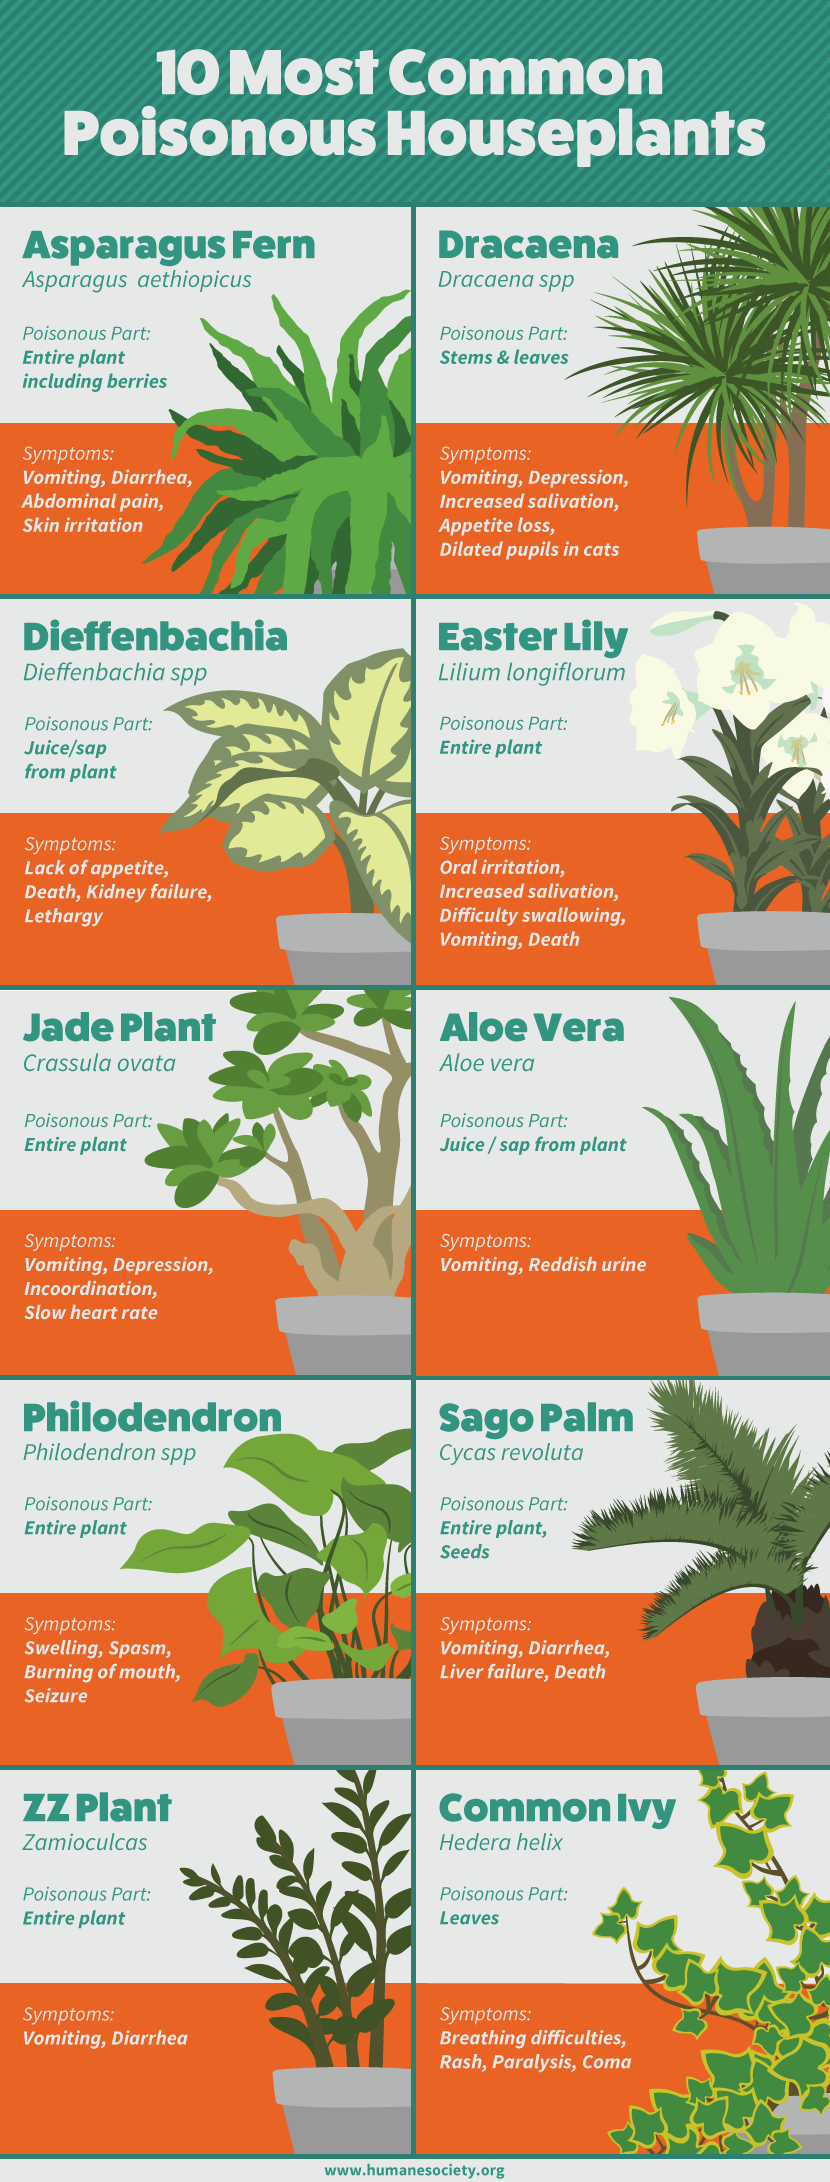 Ten Most Common Poisonous Houseplants